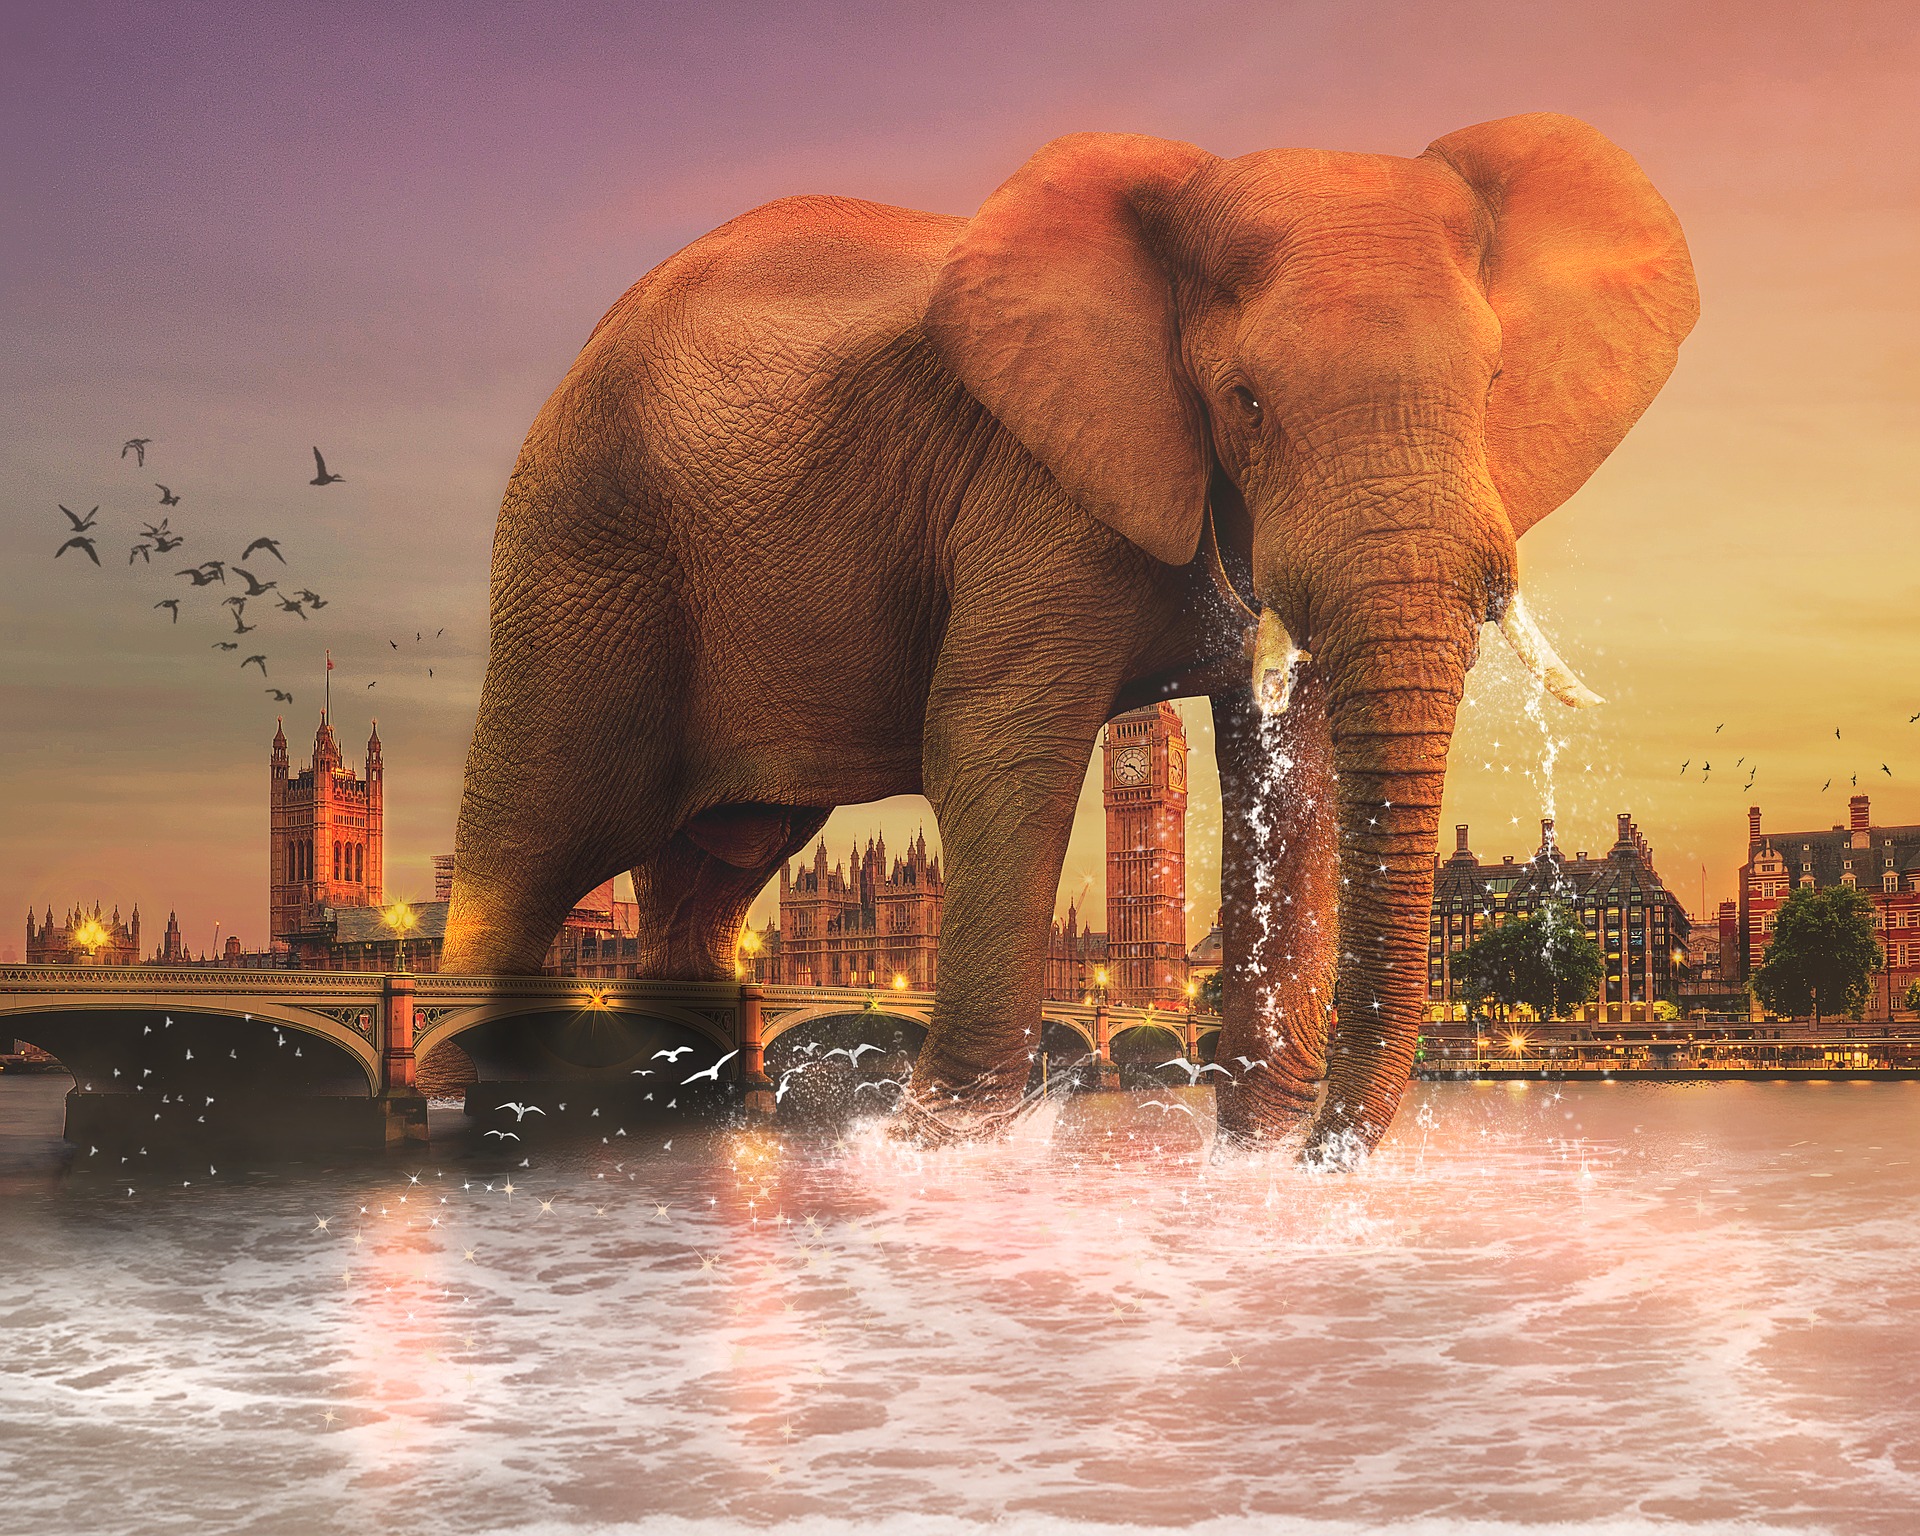 Huge elephant in river